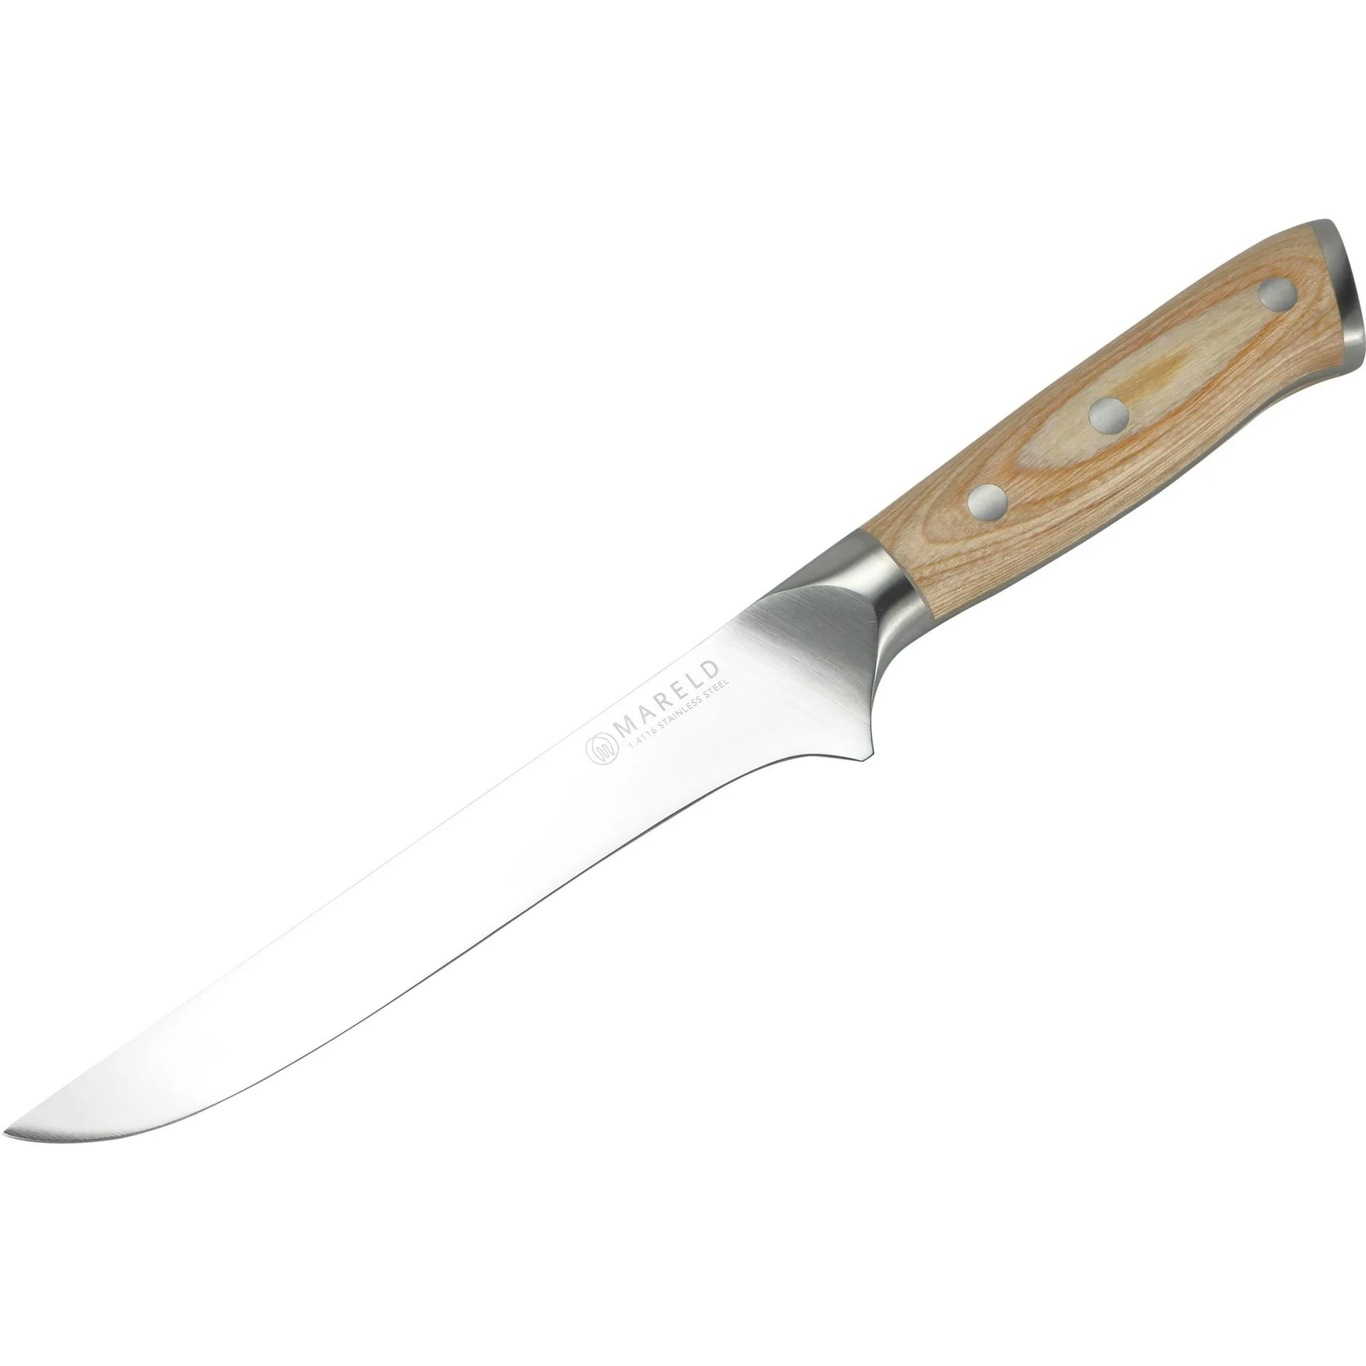 https://royaldesign.com/image/2/mareld-mareld-european-boning-knife-1?w=800&quality=80